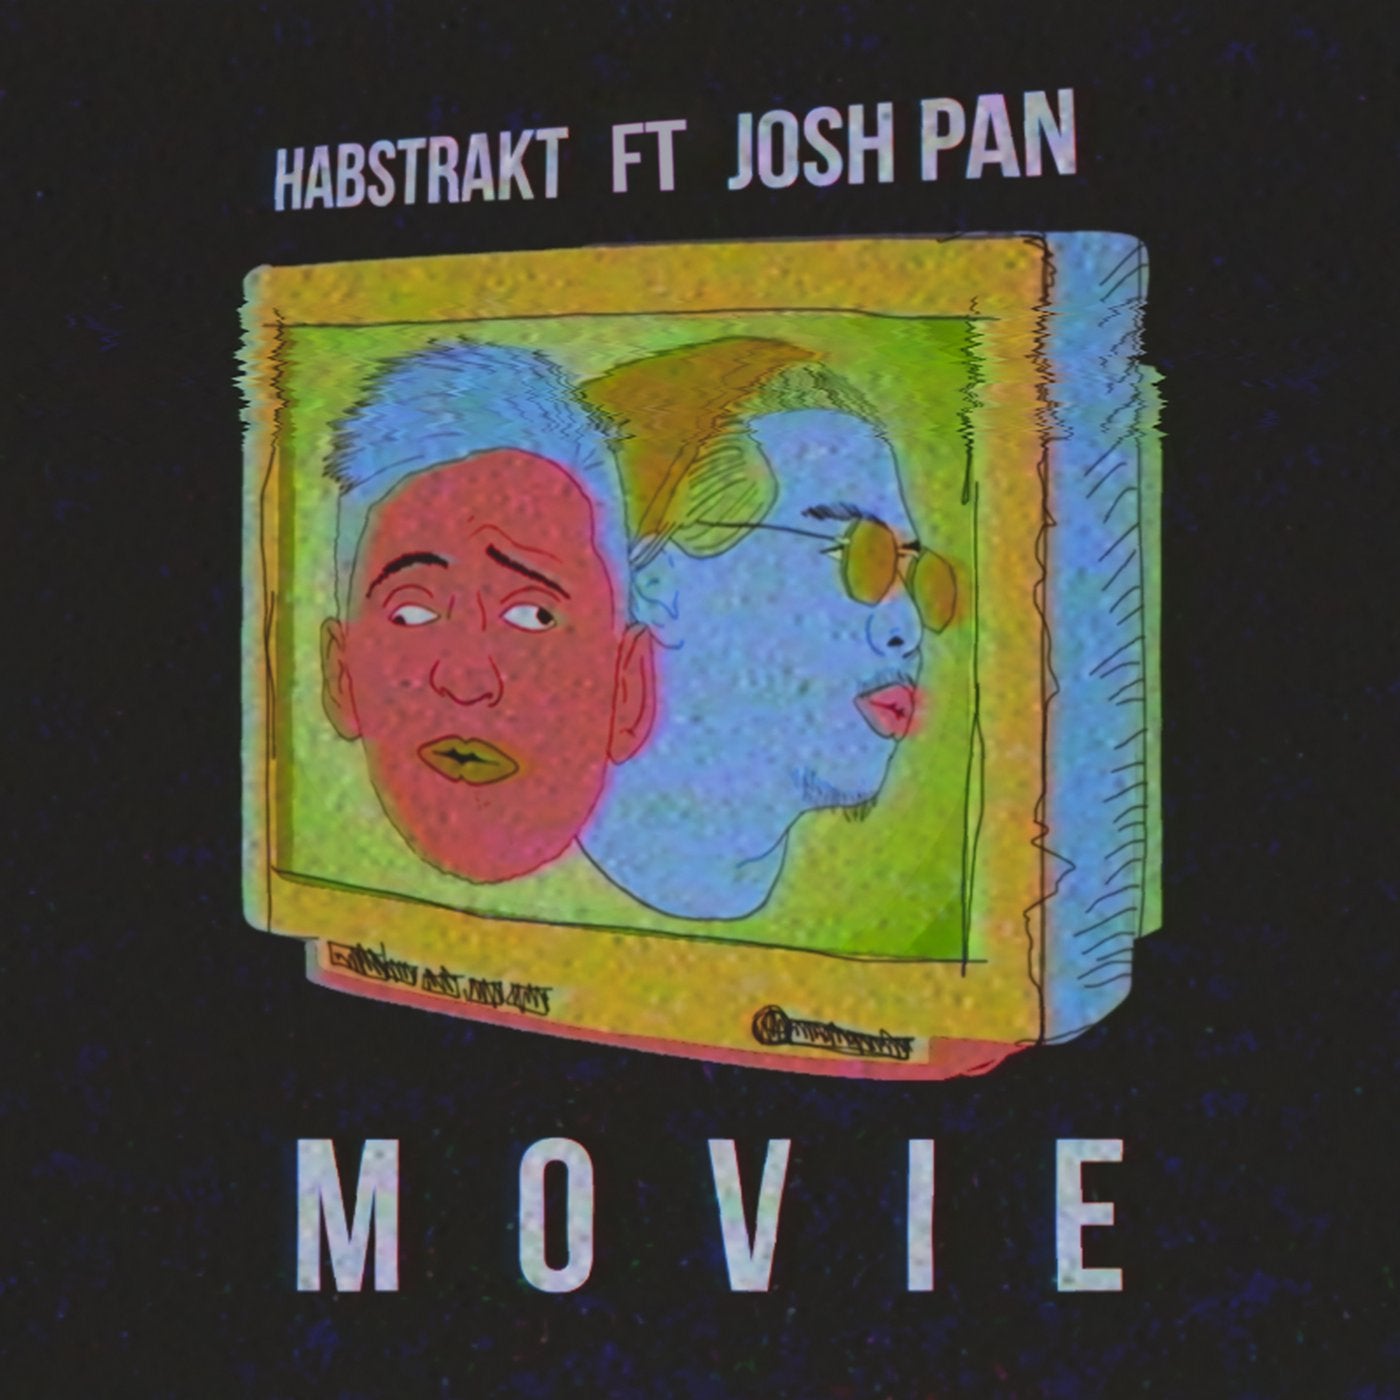 Josh pan. Habstrakt the one. Habstrakt.